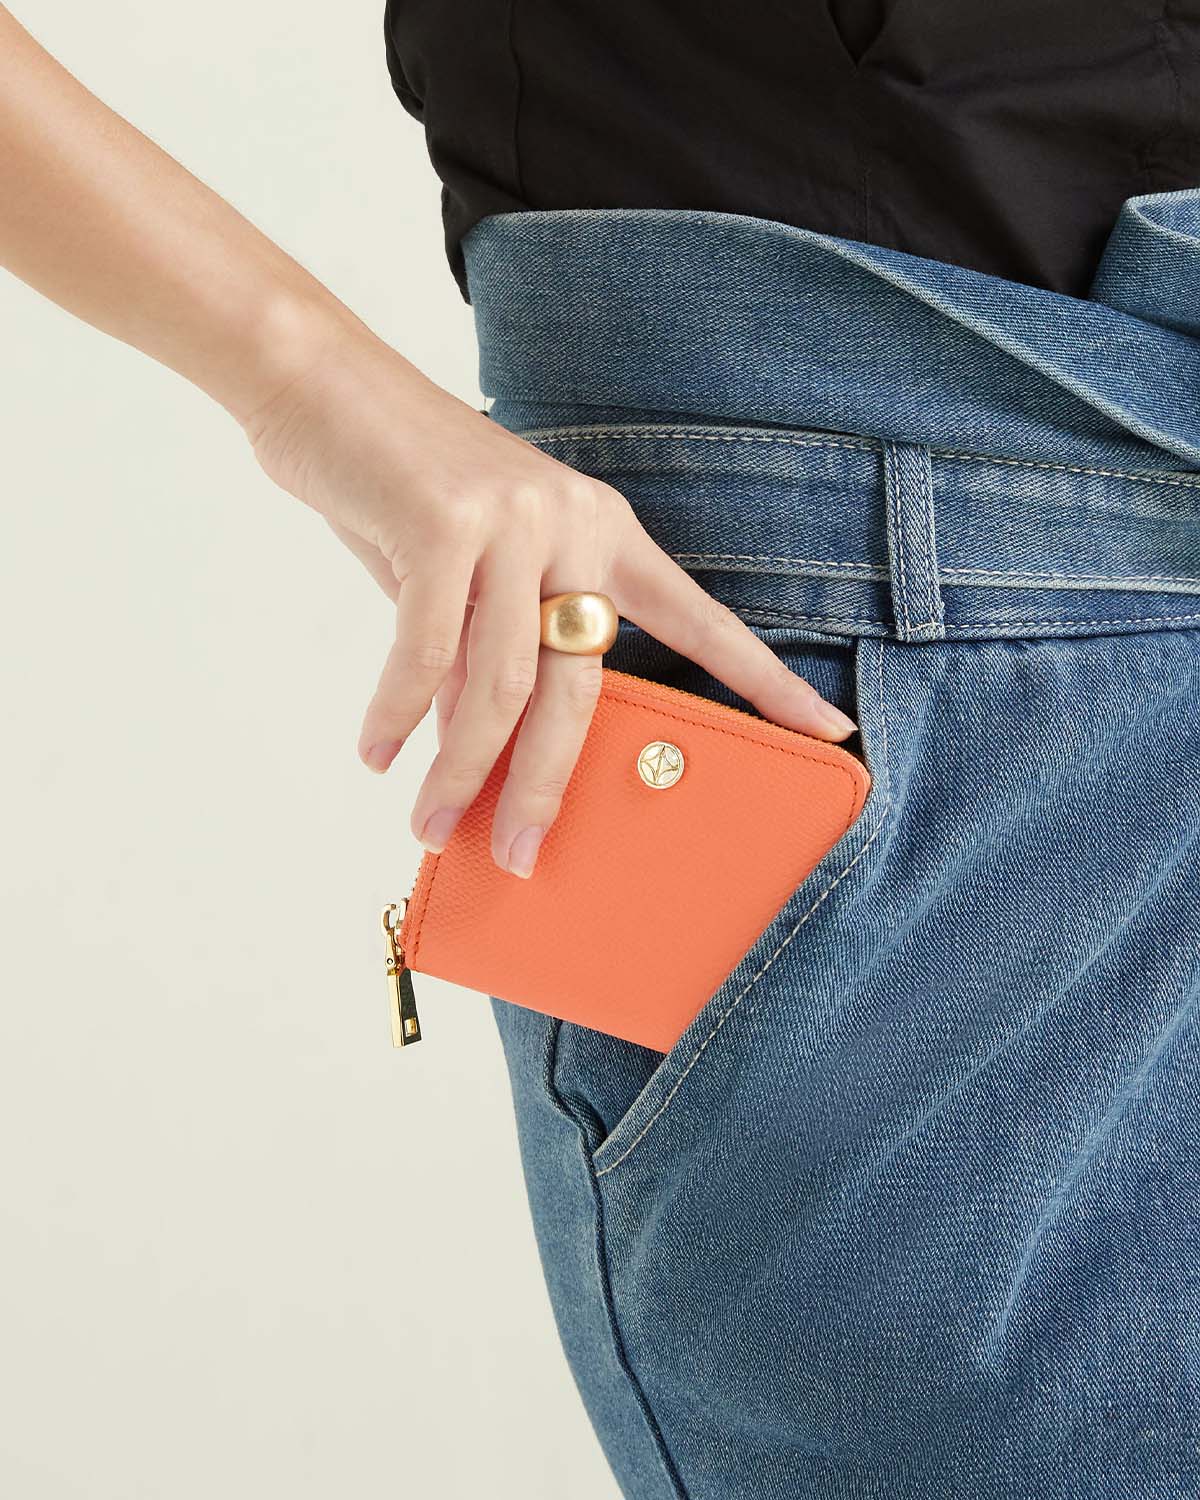 VERA Emily Zipped Wallet in Joyful Orange กระเป๋าสตางค์หนังแท้ ทรงสั้น ซิปรอบ สีส้ม